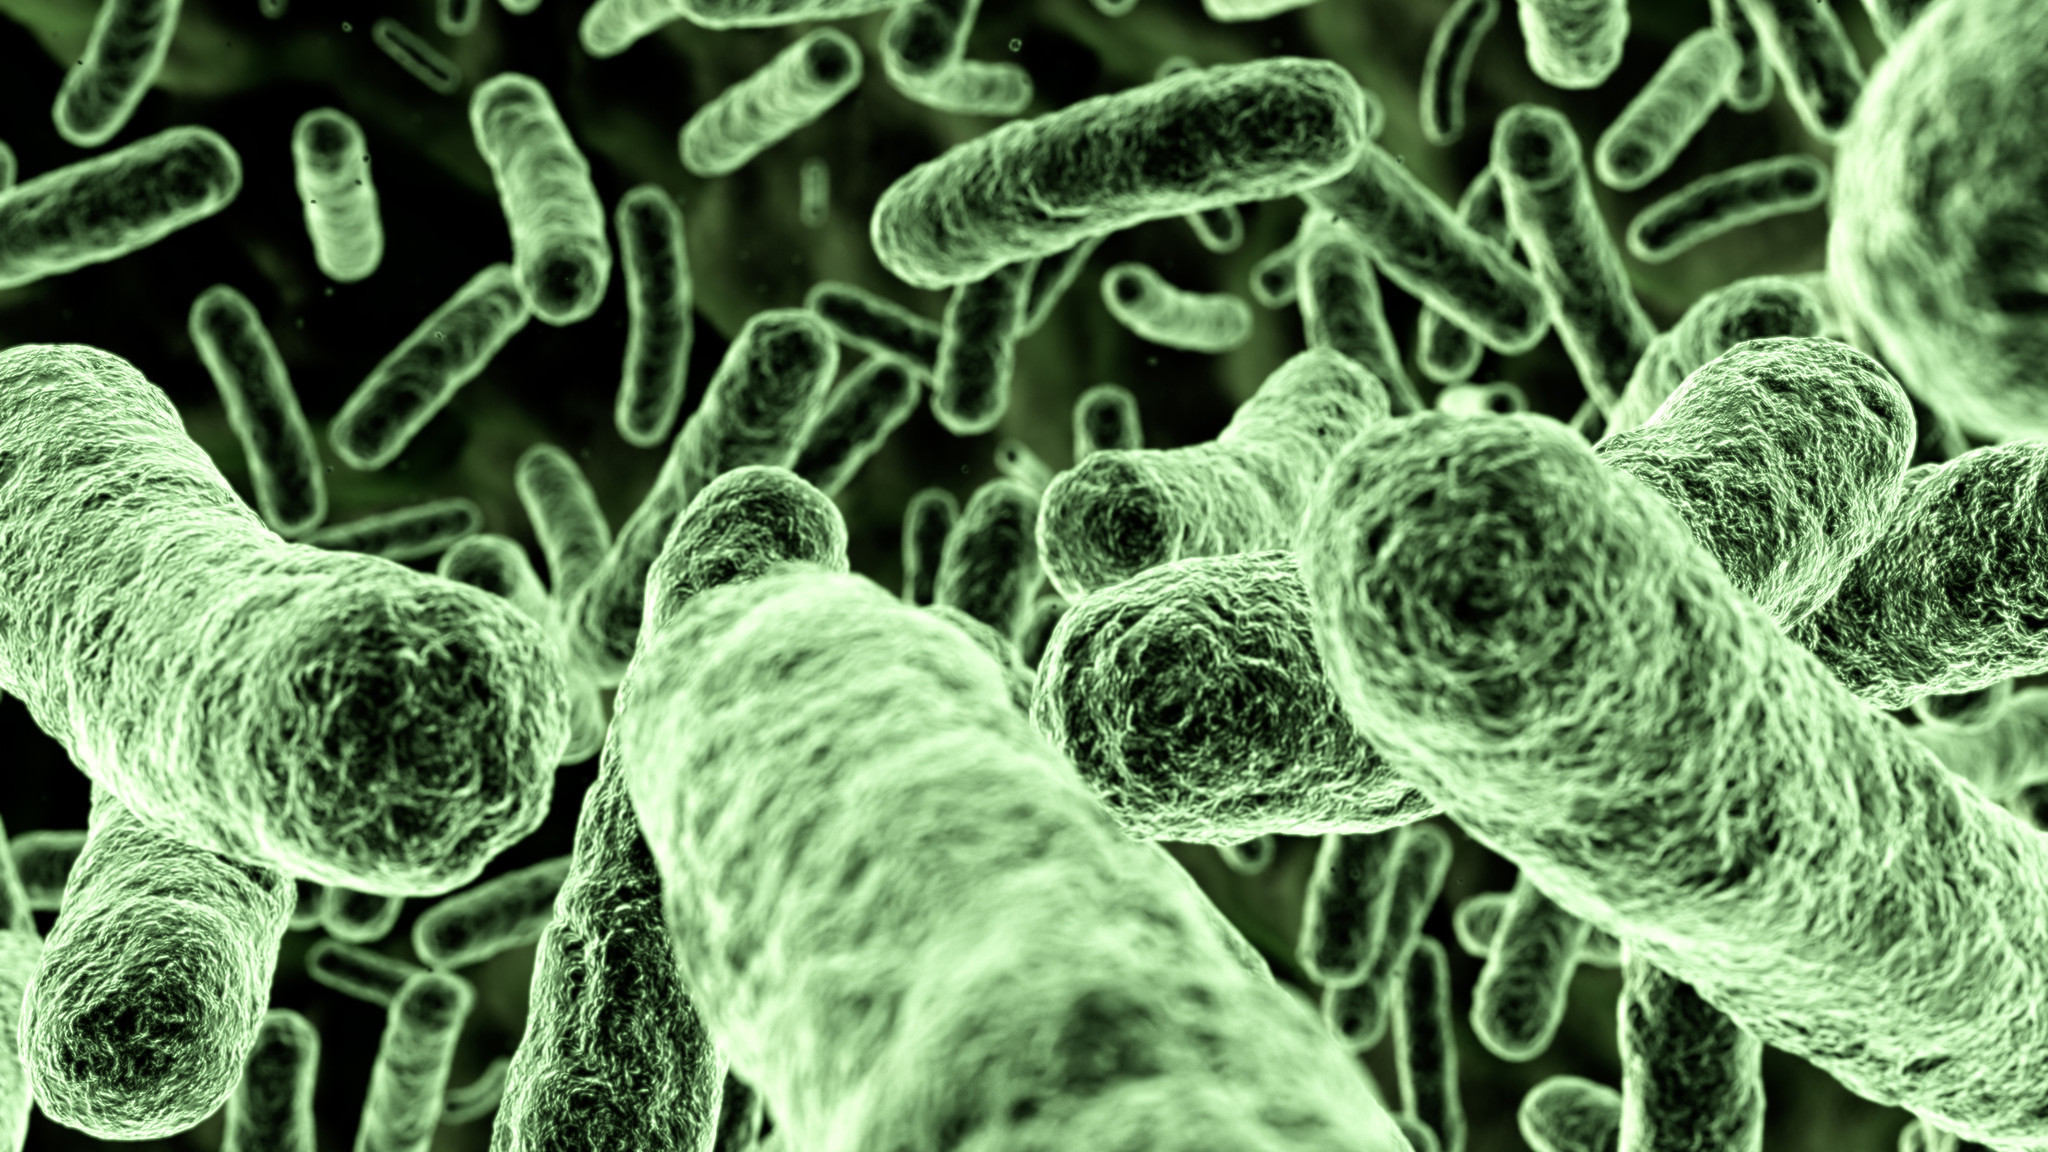 Бактерии домашних условиях. Бактерии. Микроорганизмы на коже человека. Патогенные бактерии под микроскопом.